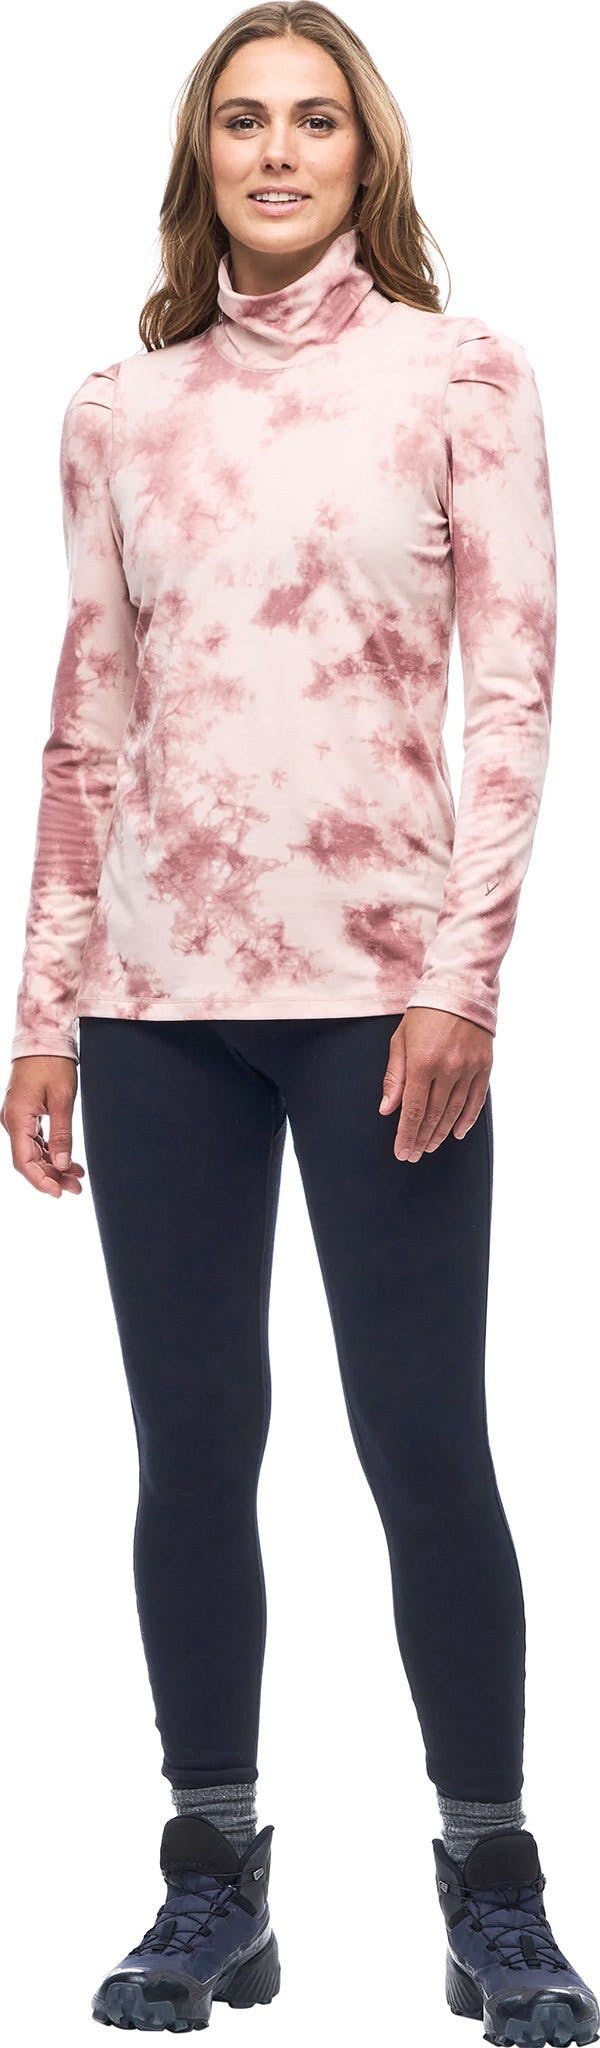 Product image for Matara Long Sleeve Mockneck T-Shirt - Women's